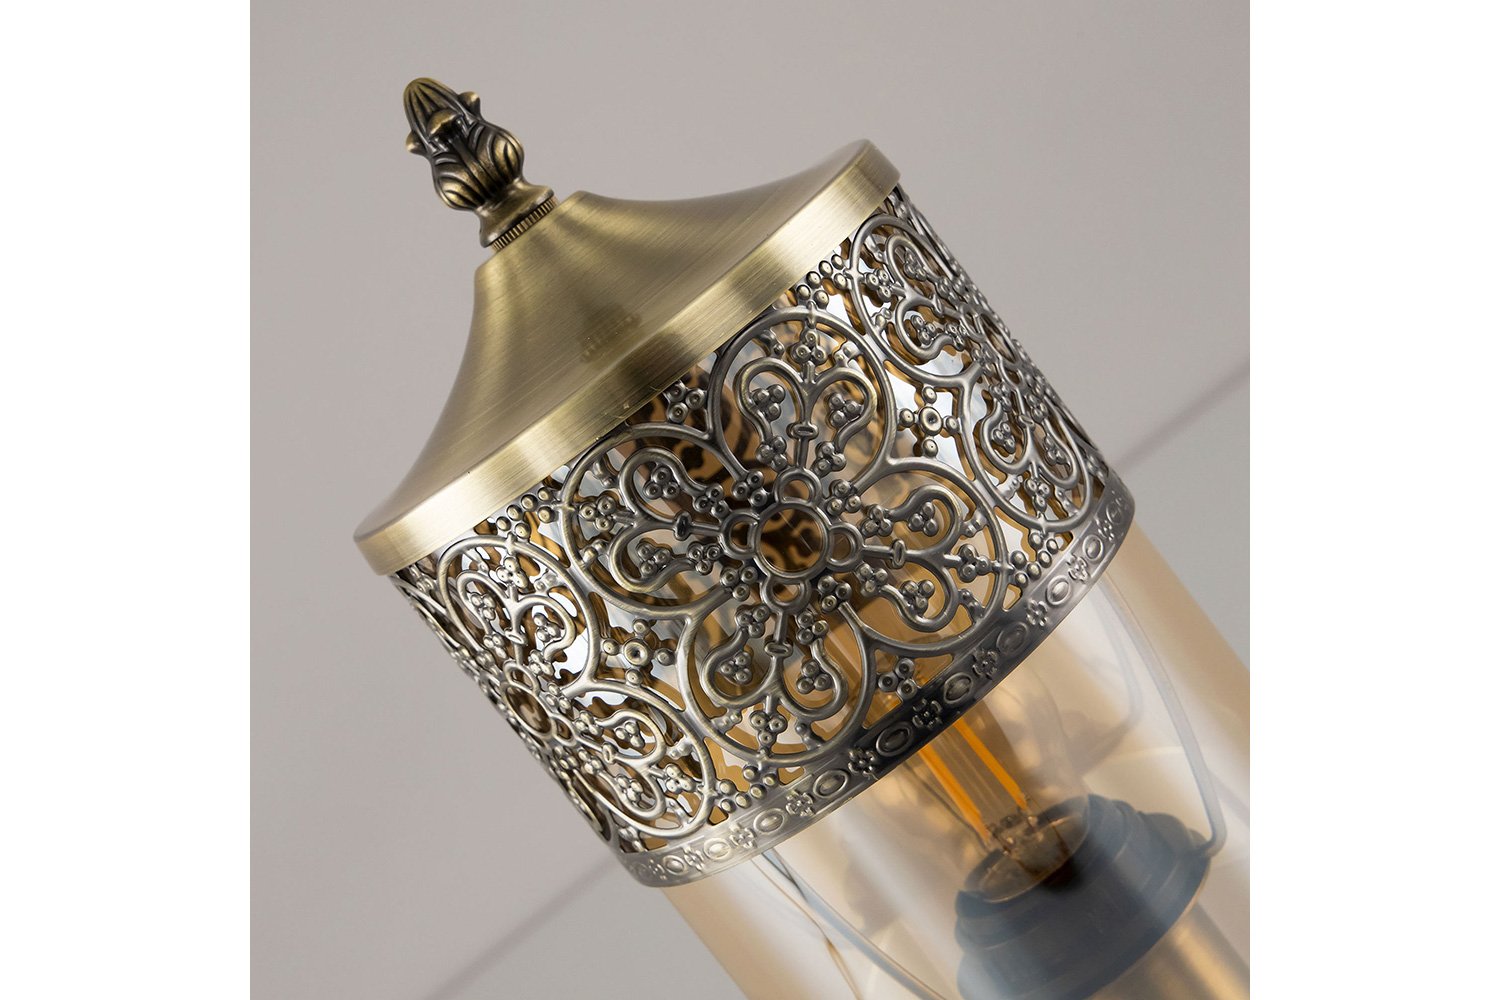 фото Лампа настольная эмир citilux